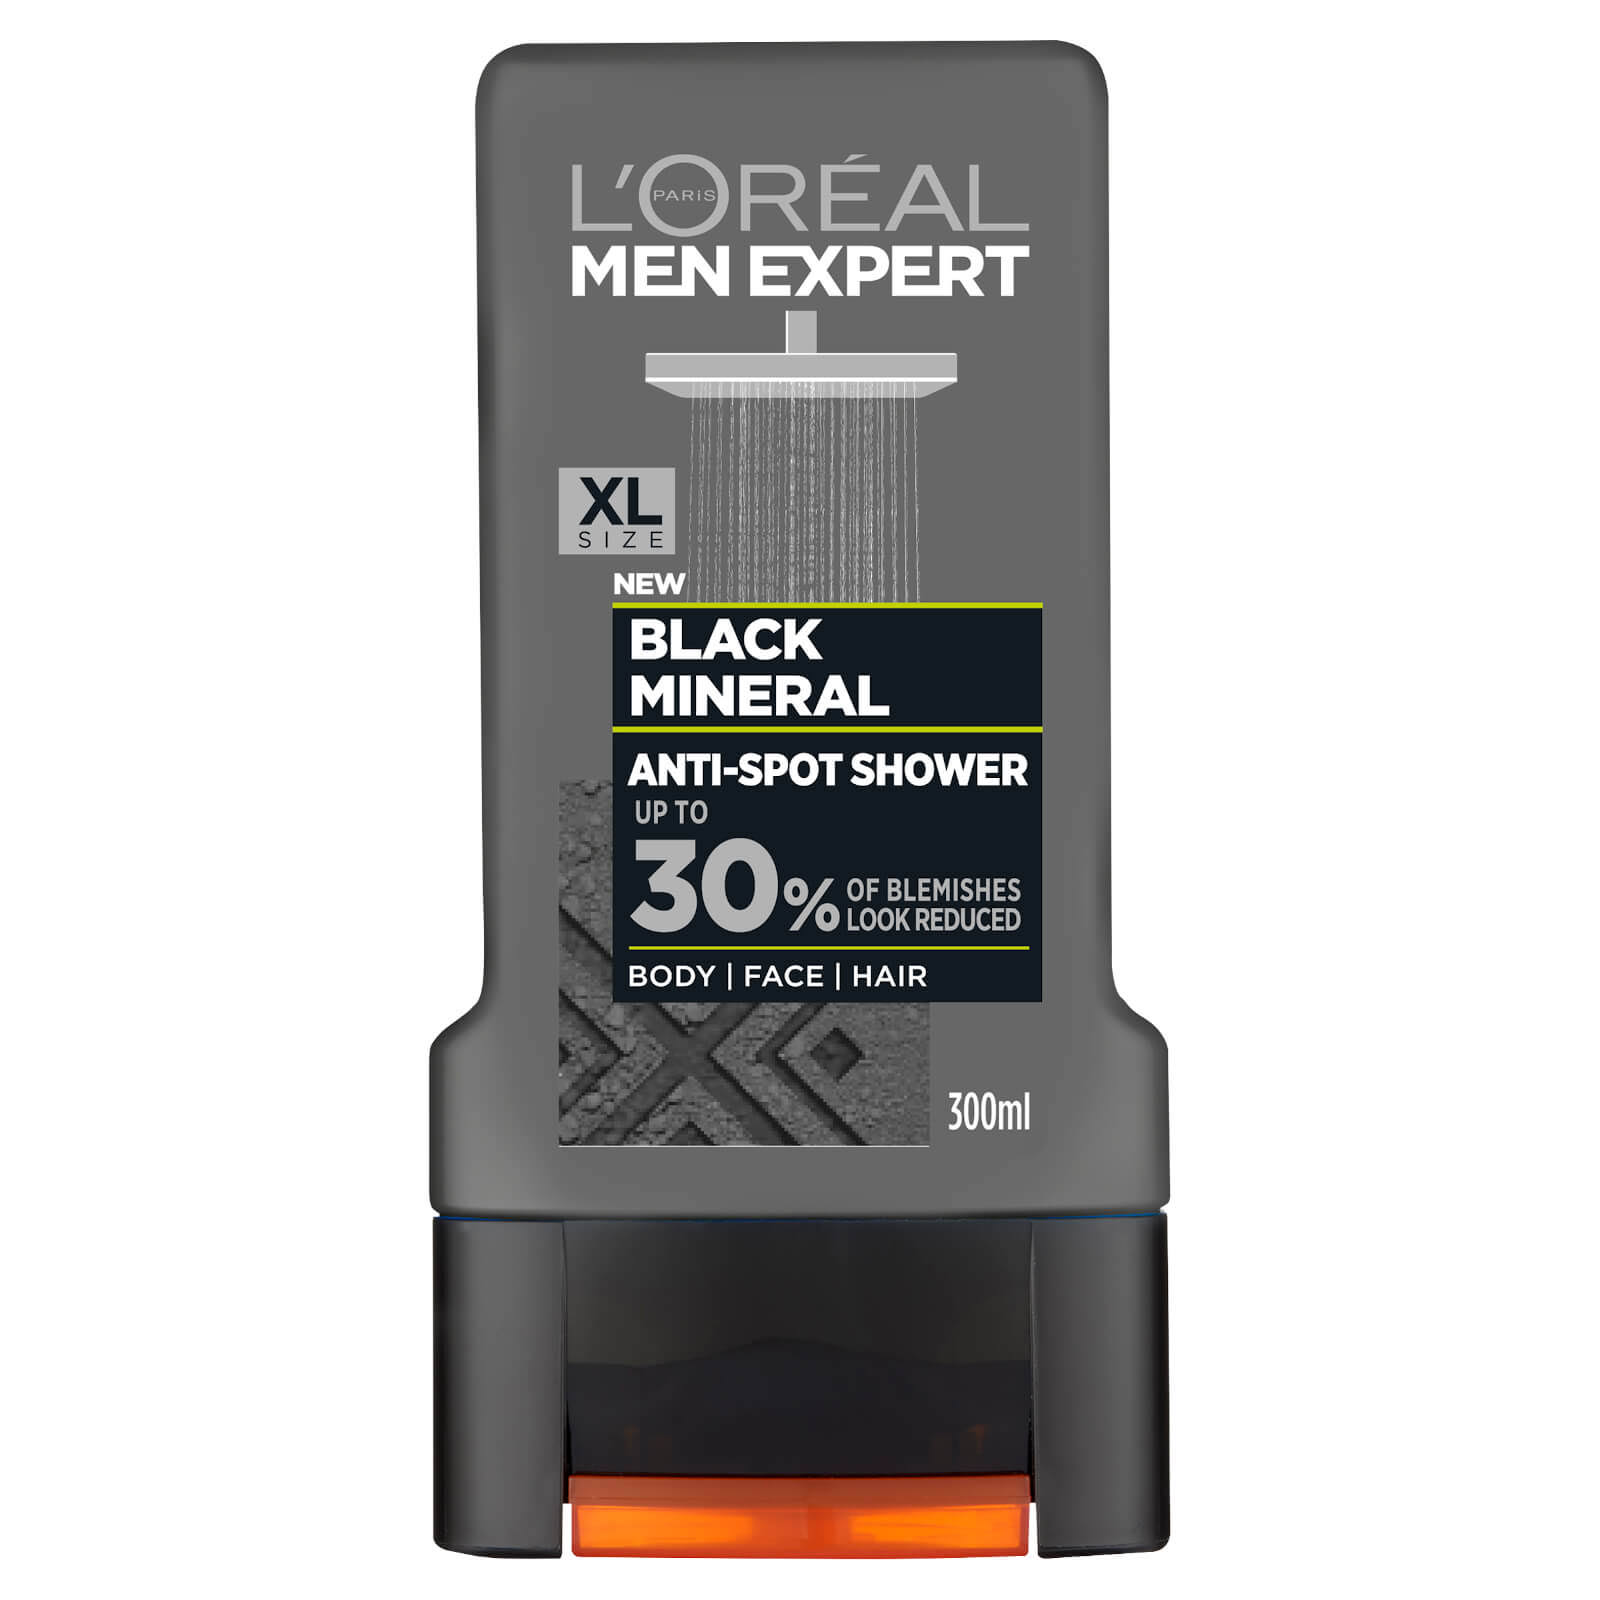 L'Oreal Paris Men Expert Black Mineral Shower Gel - 300ml